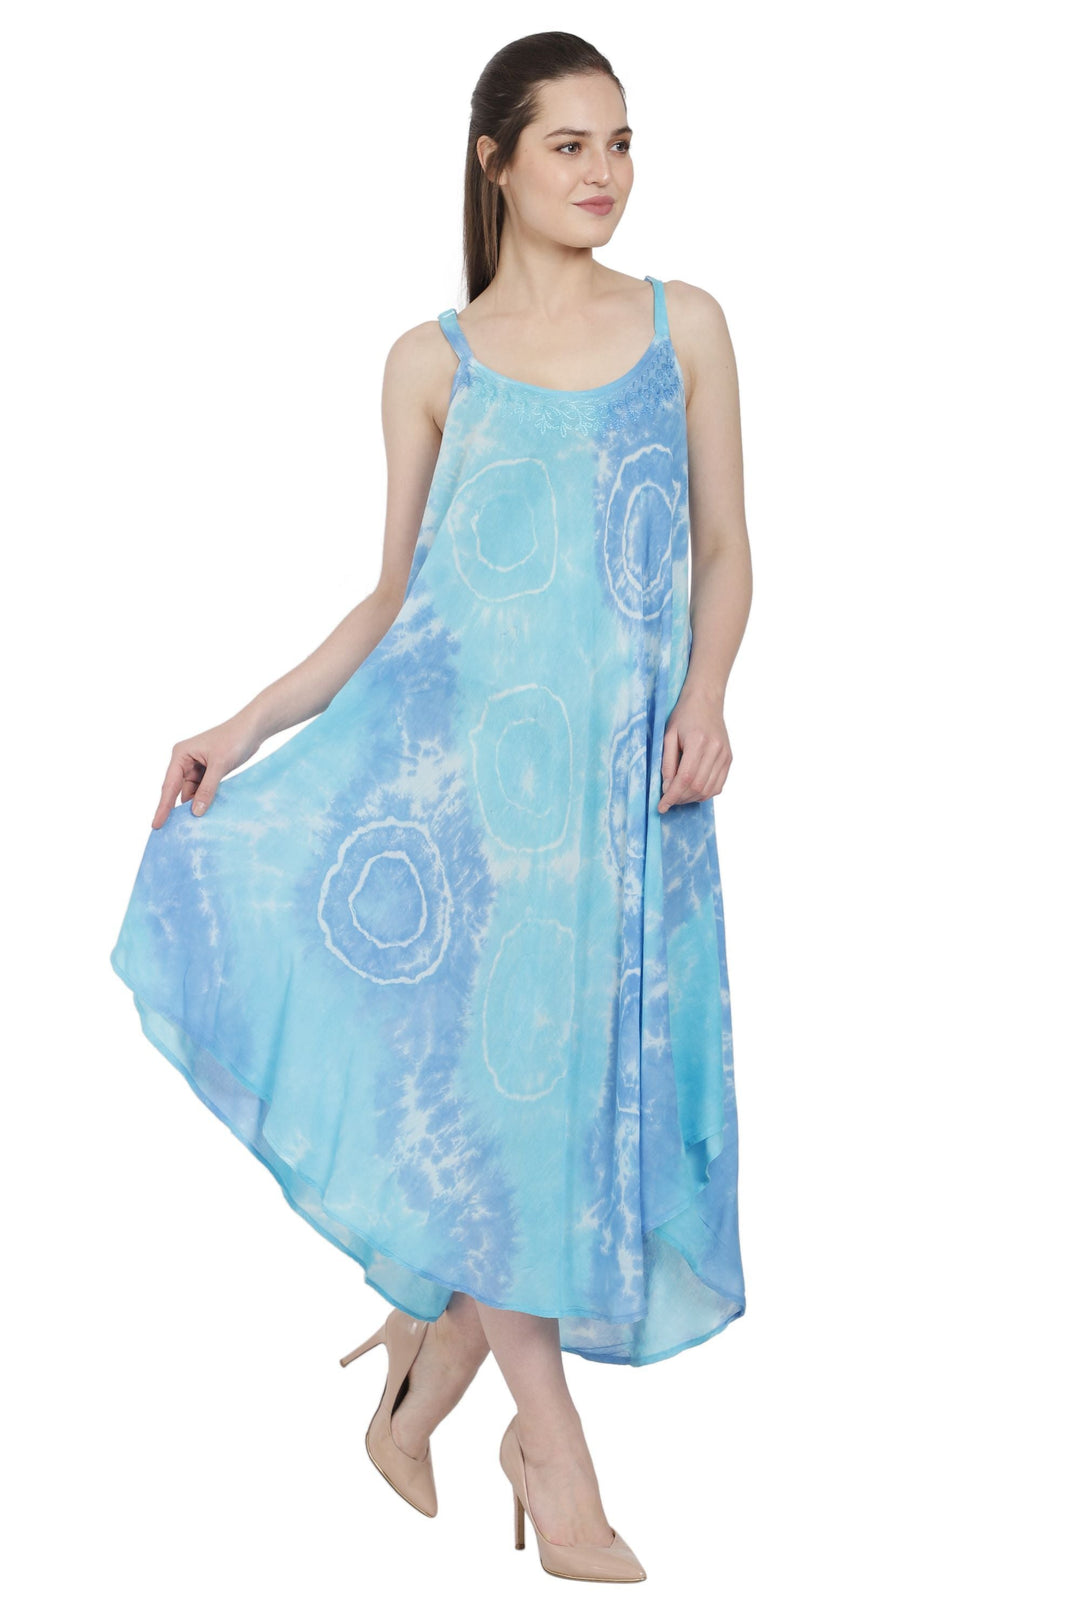 Ocean Swirl Beach Umbrella Dress UD48-2371